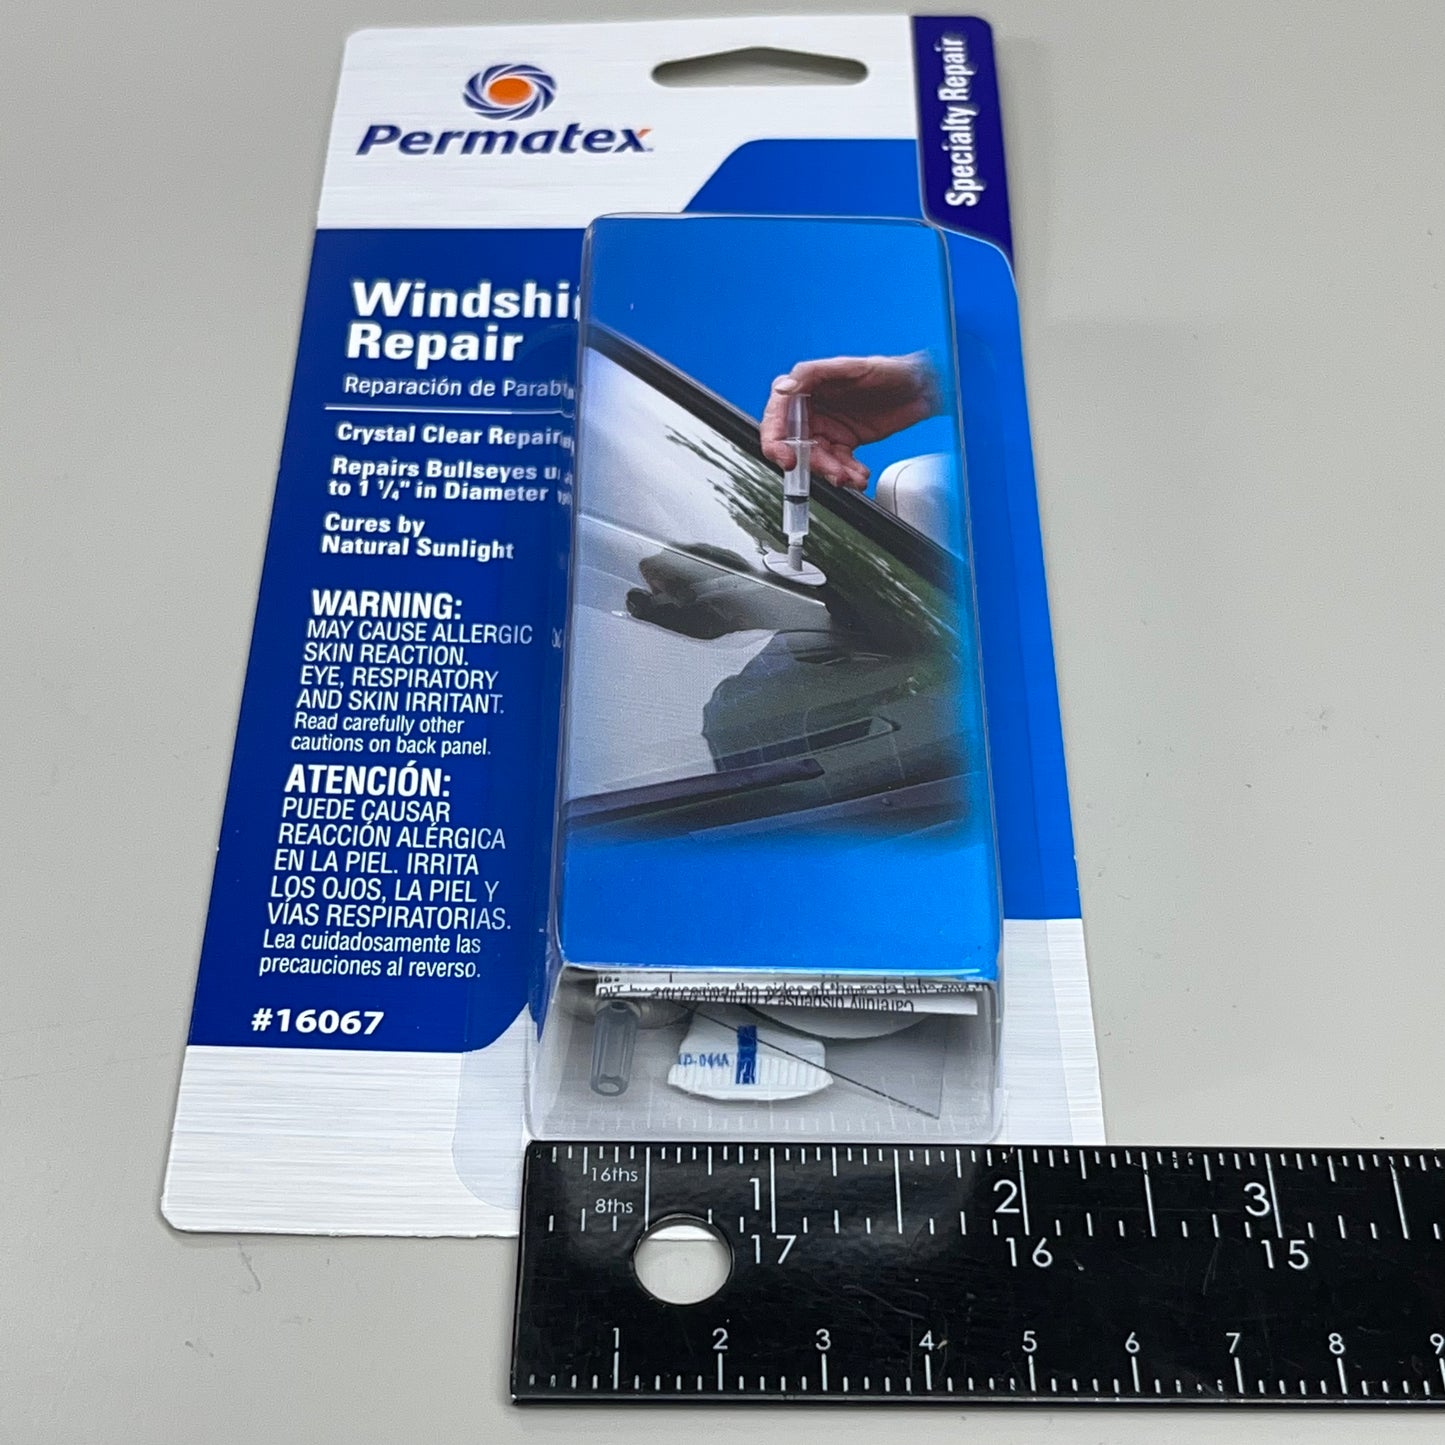 PERMATEX Windshield Repairs bullseyes up to a 1 1/4" inch in Diameter 16067 (New)